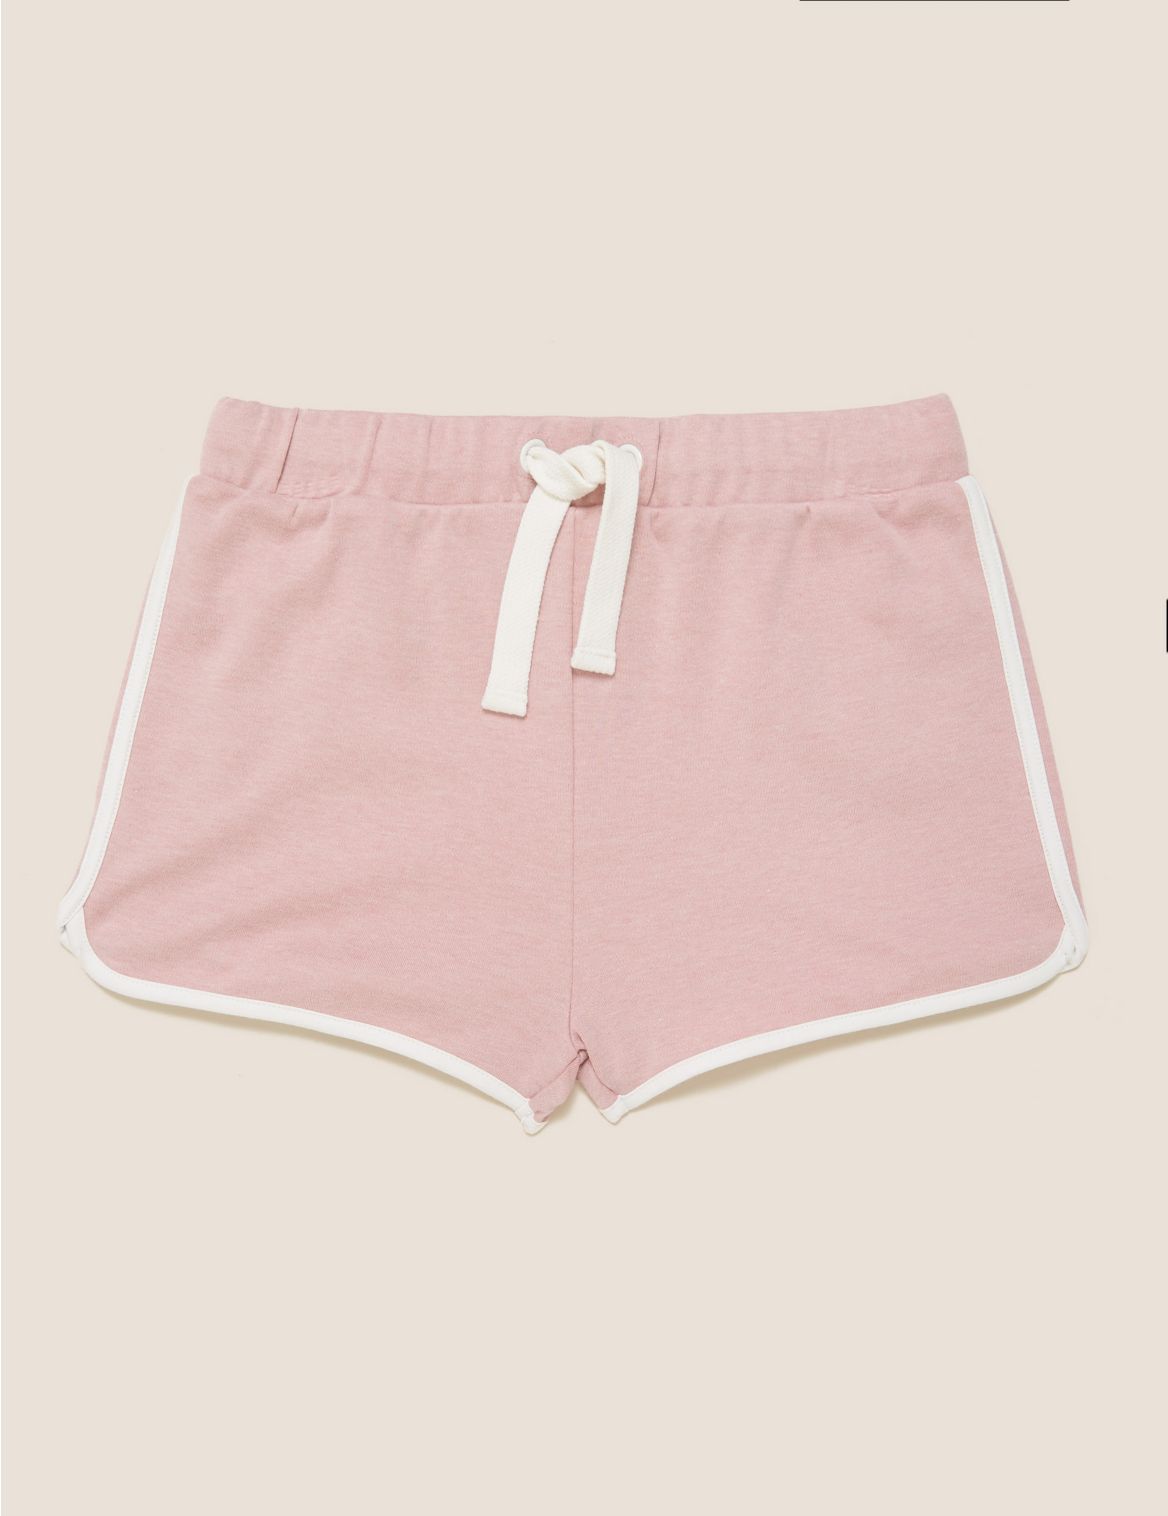 Cotton Contrast Trim Runner Shorts (6-16 Yrs) pink